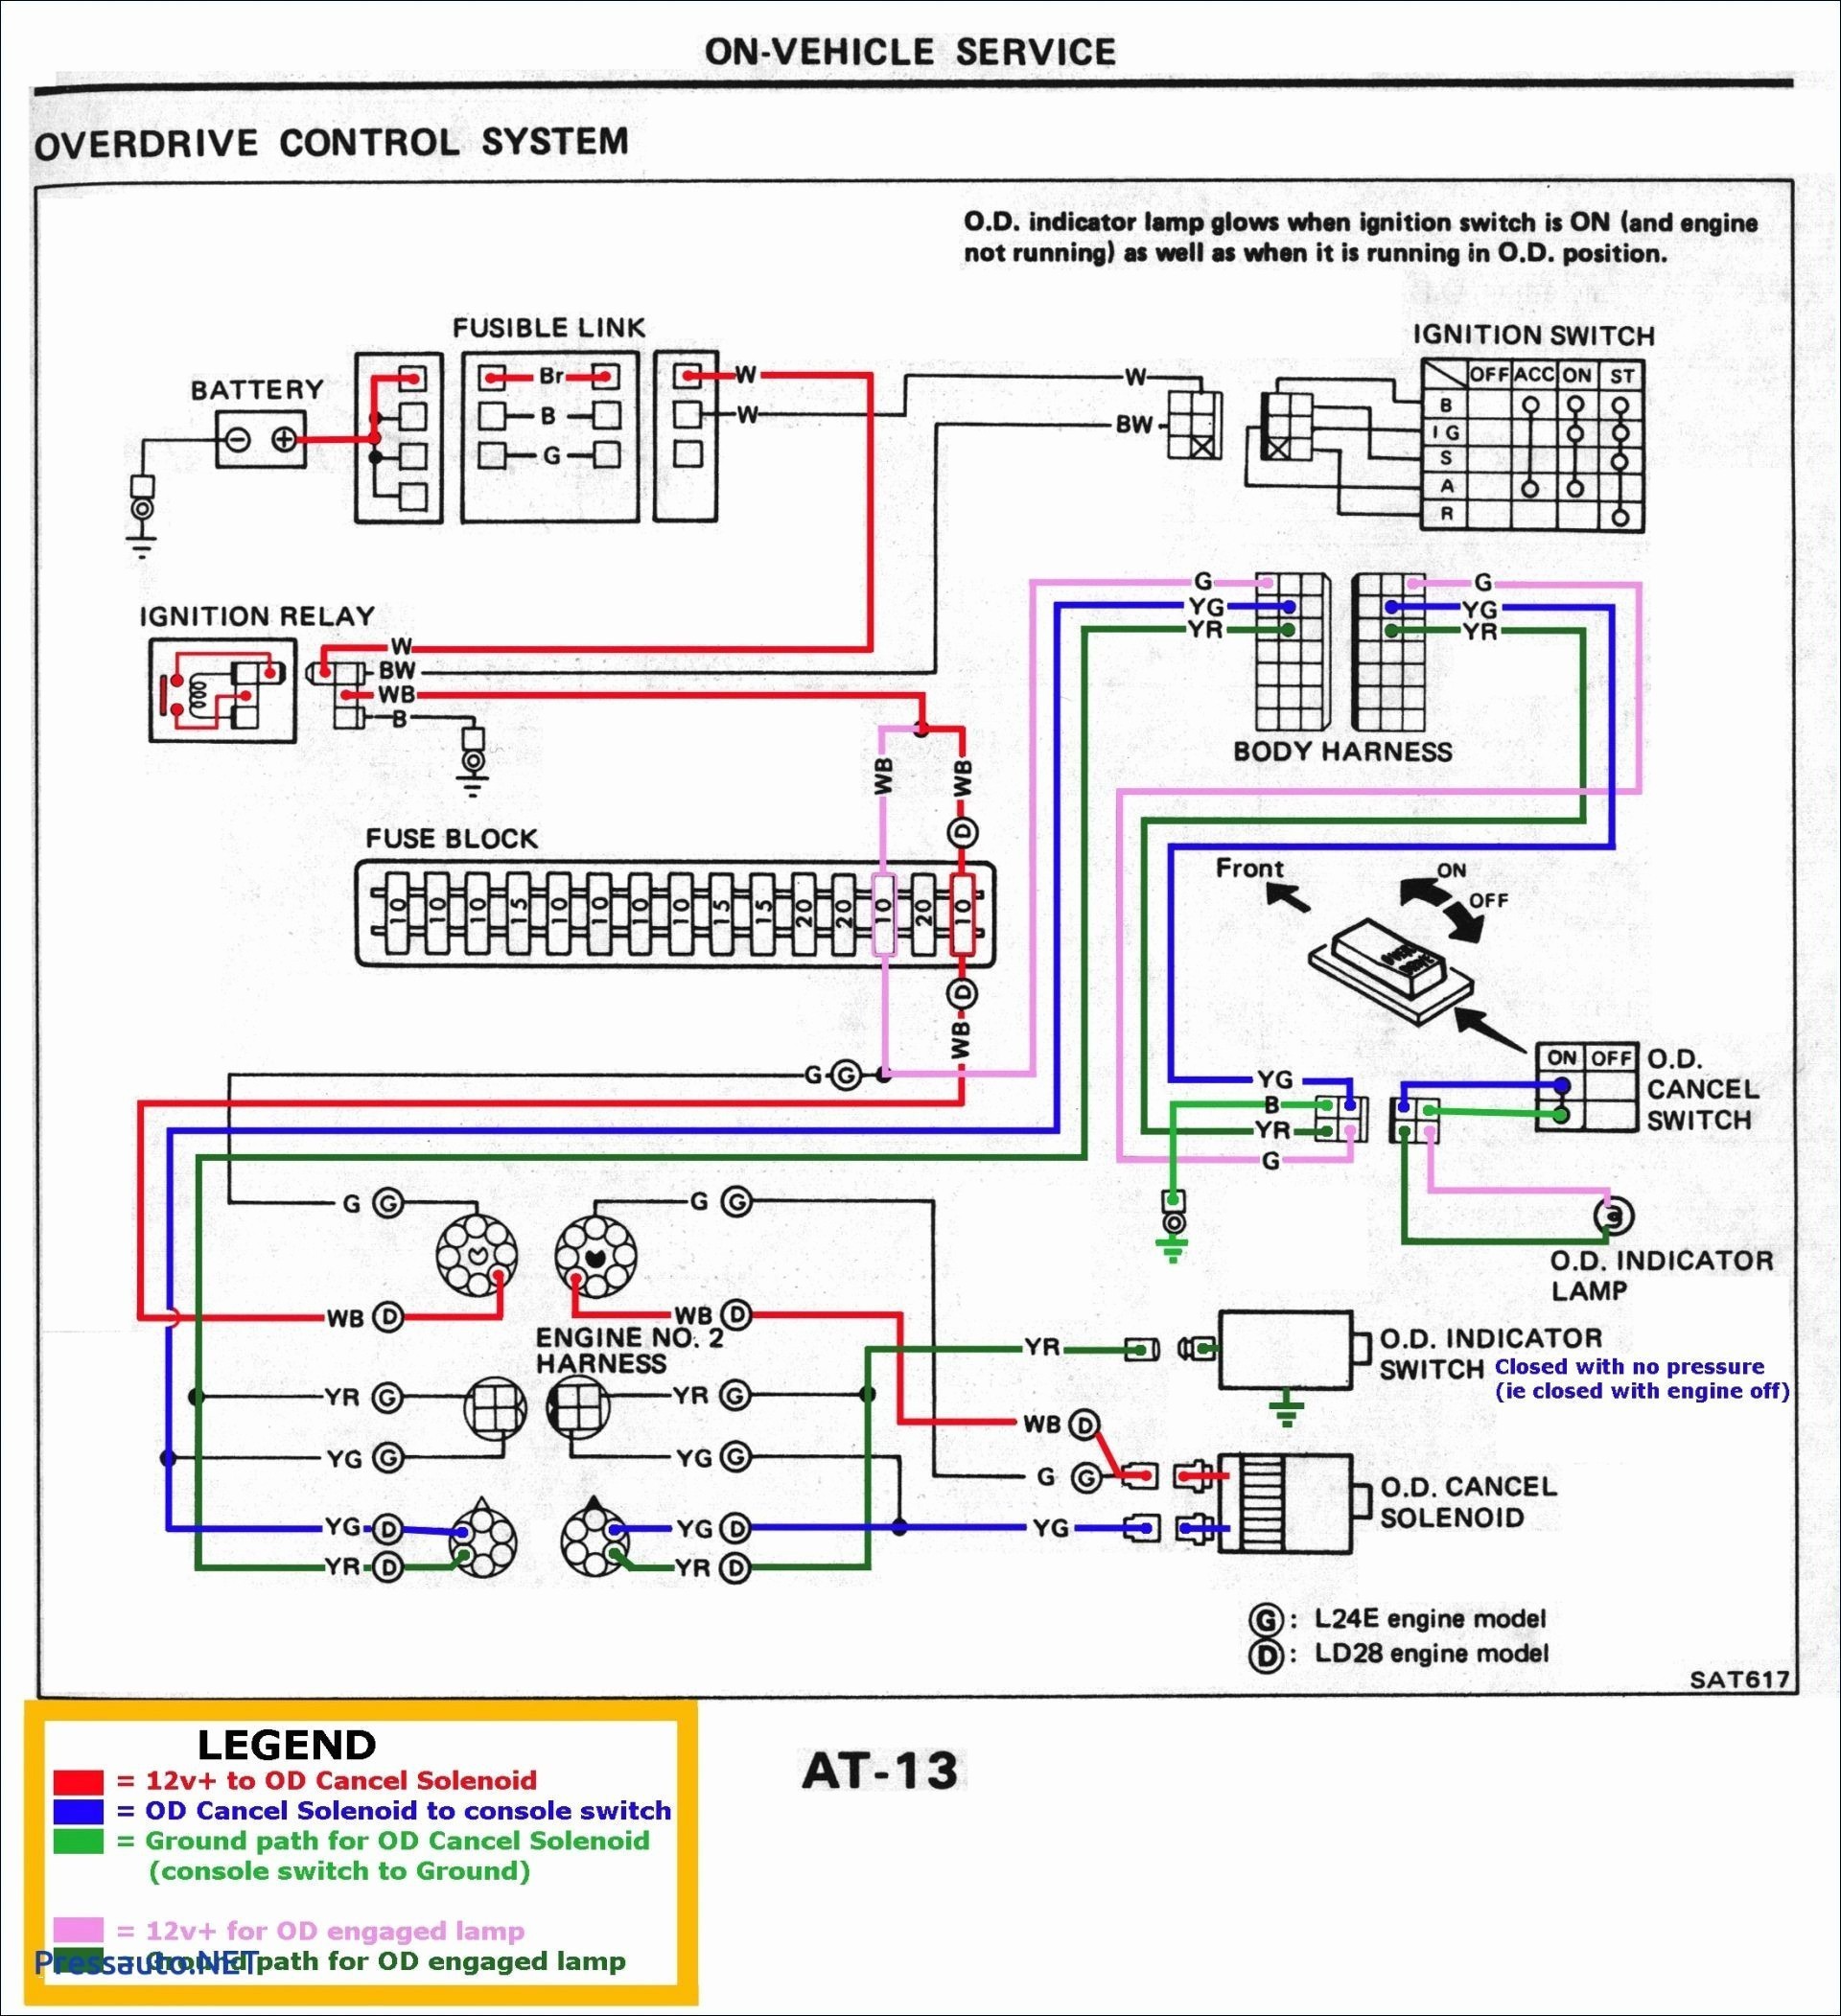 Power Window Diagram Wiring Diagram Power Window Archives Joescablecar Of Power Window Diagram